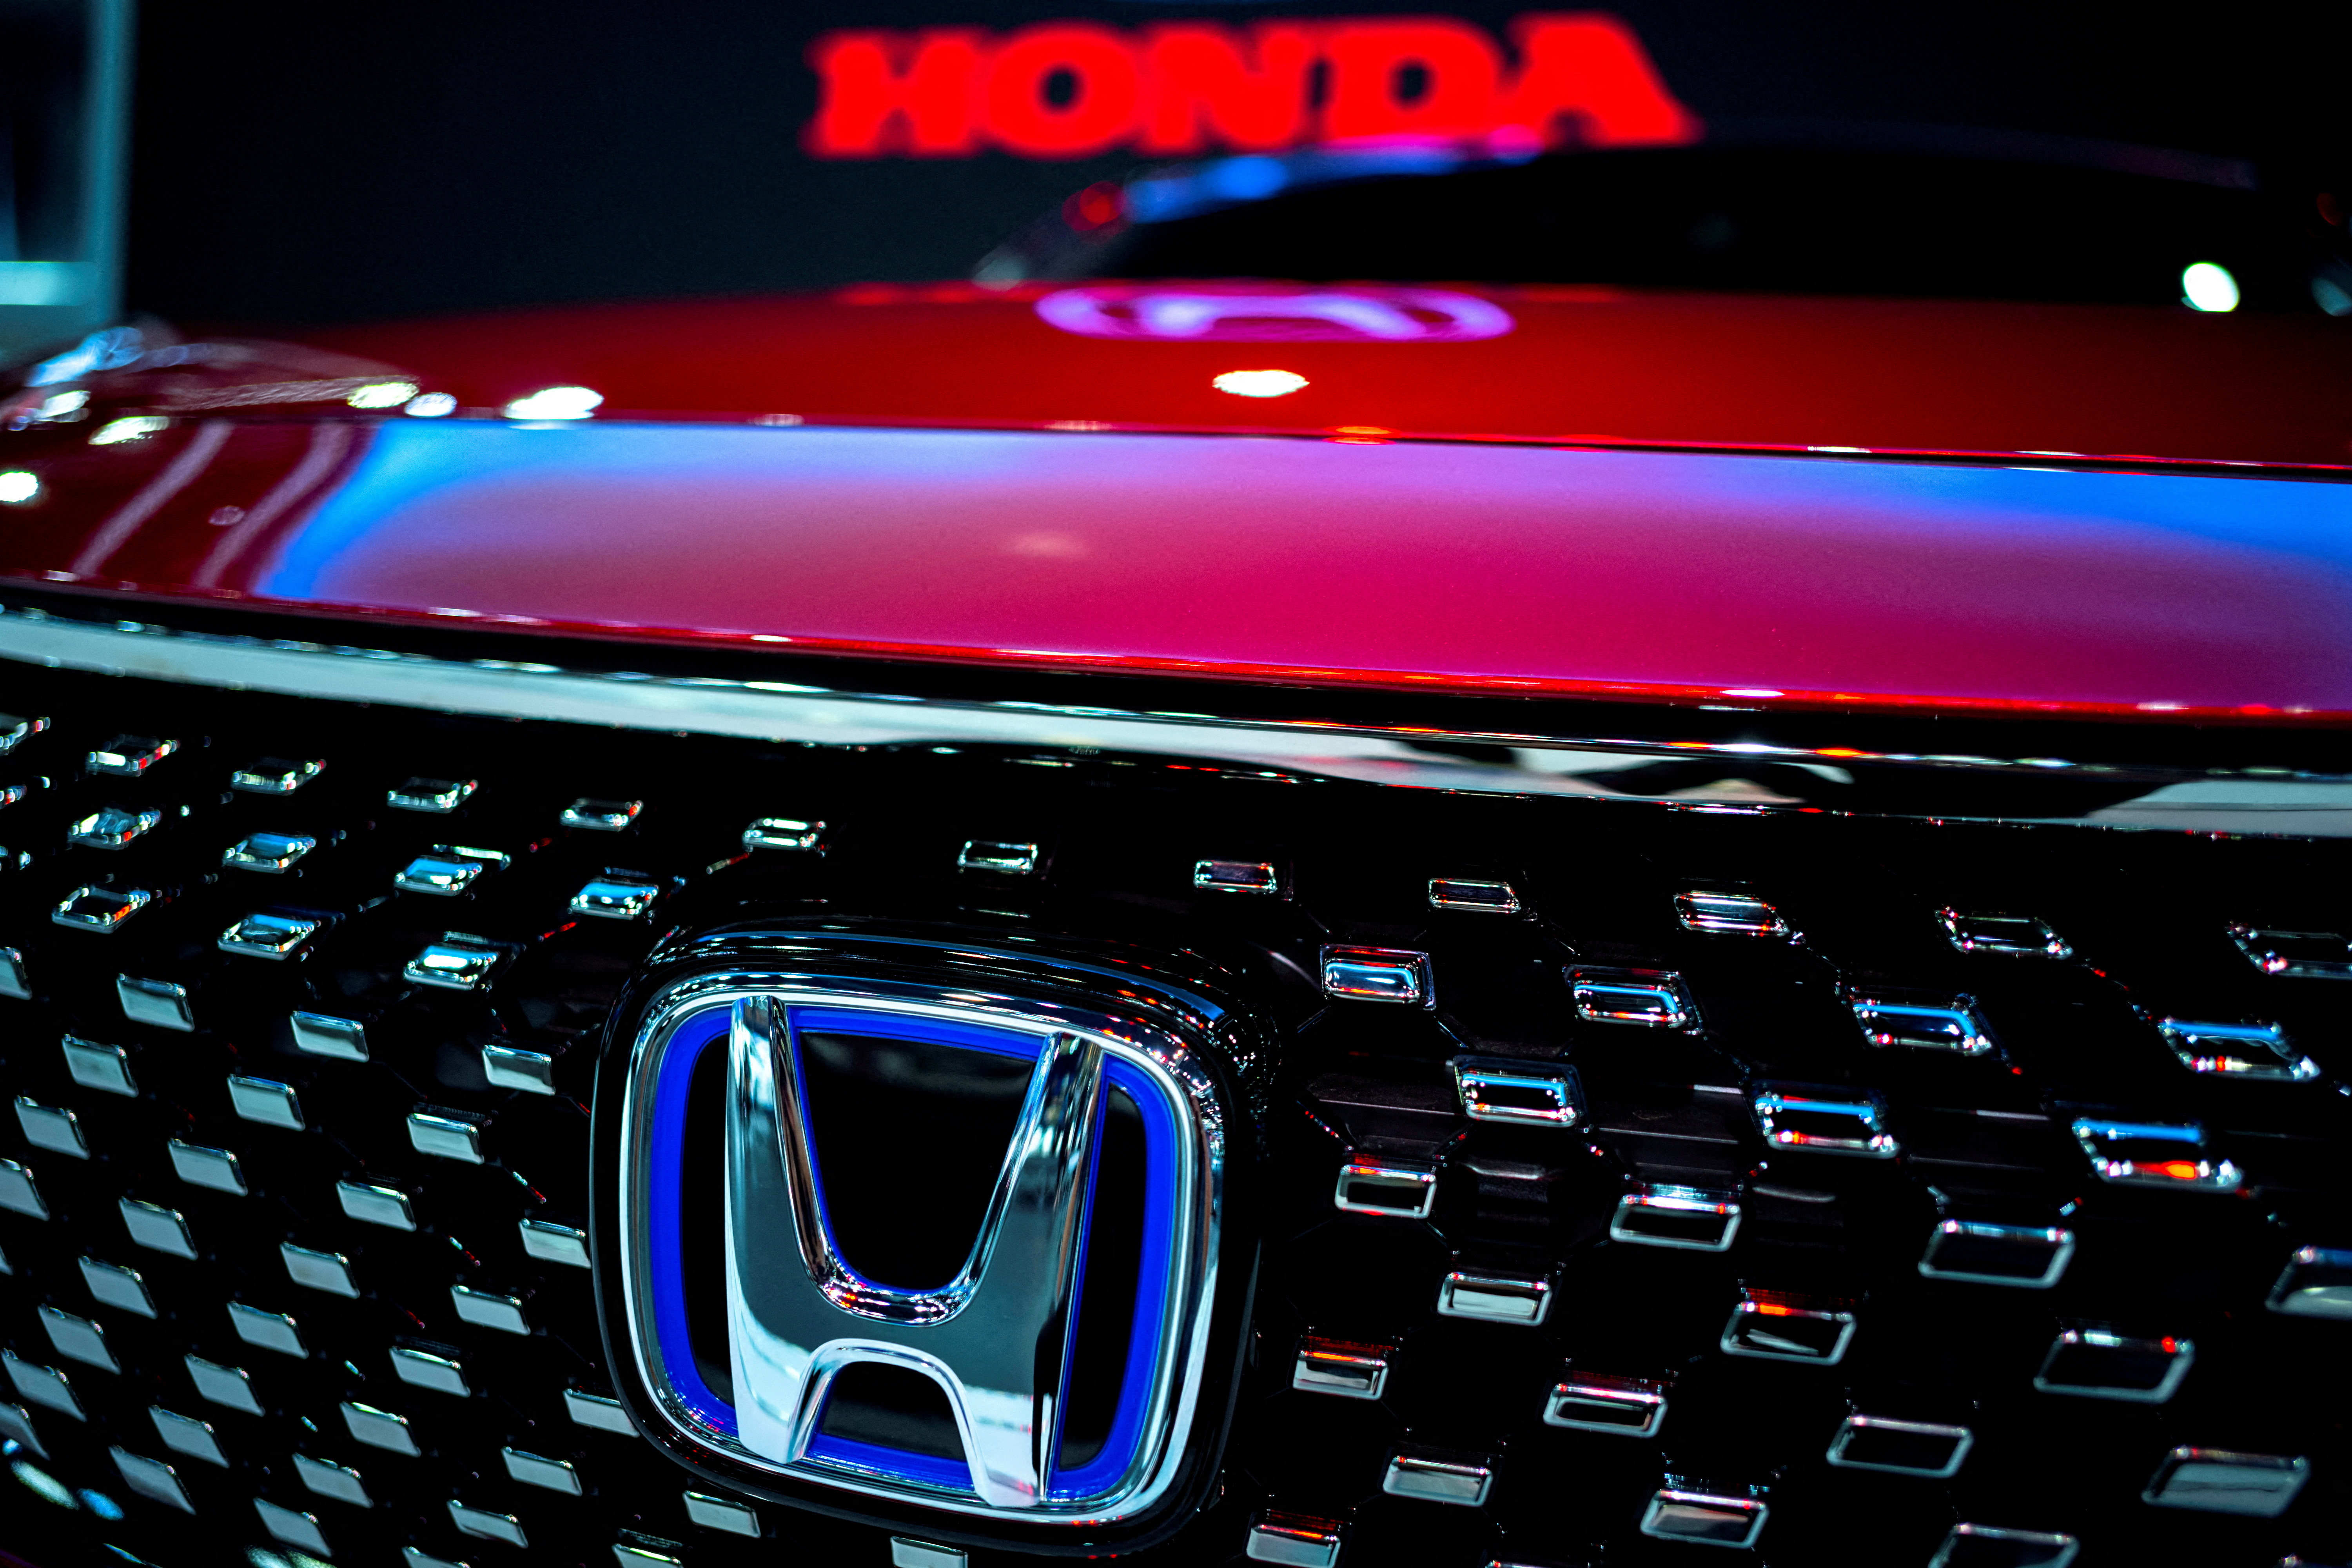 The Honda Motor logo is pictured at the 43rd Bangkok International Motor Show in Bangkok